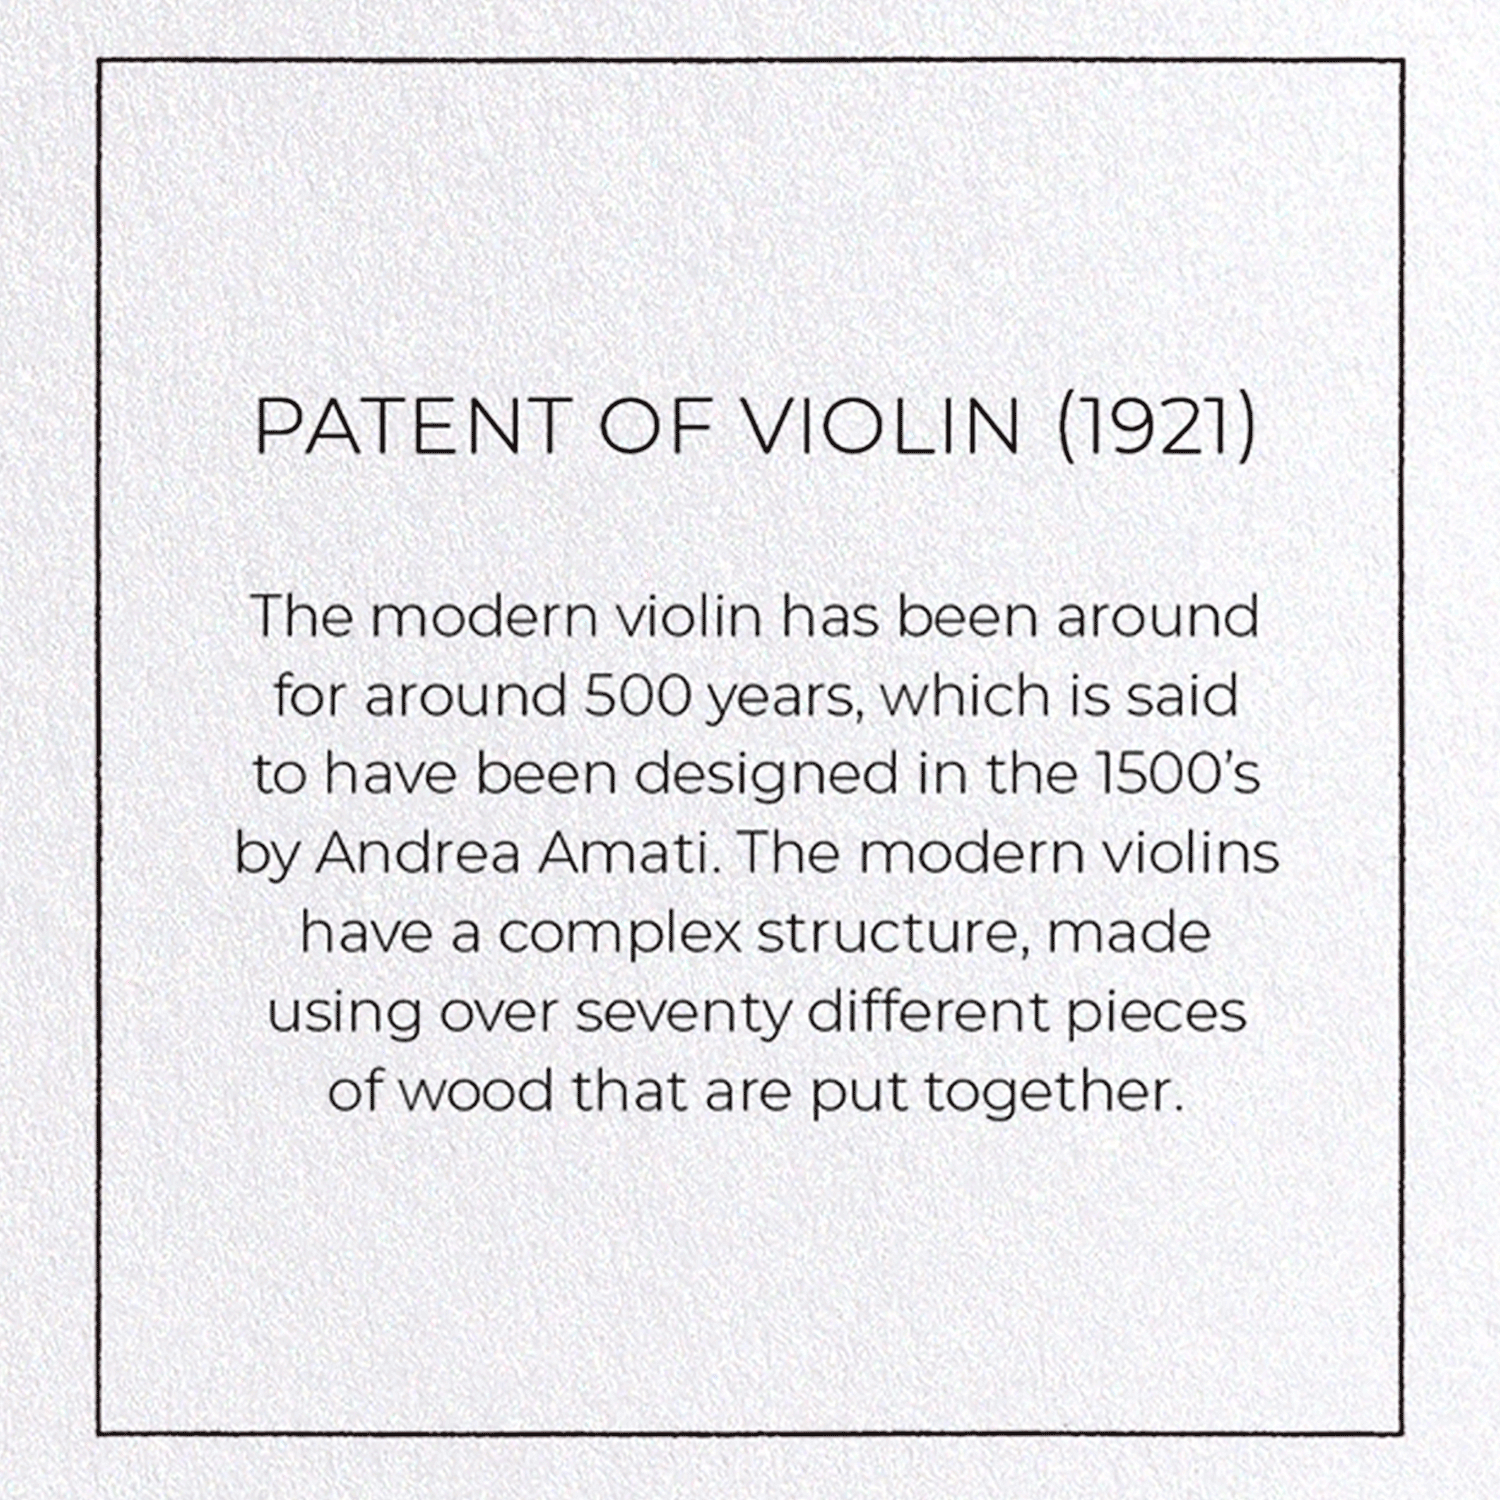 PATENT OF VIOLIN (1921)